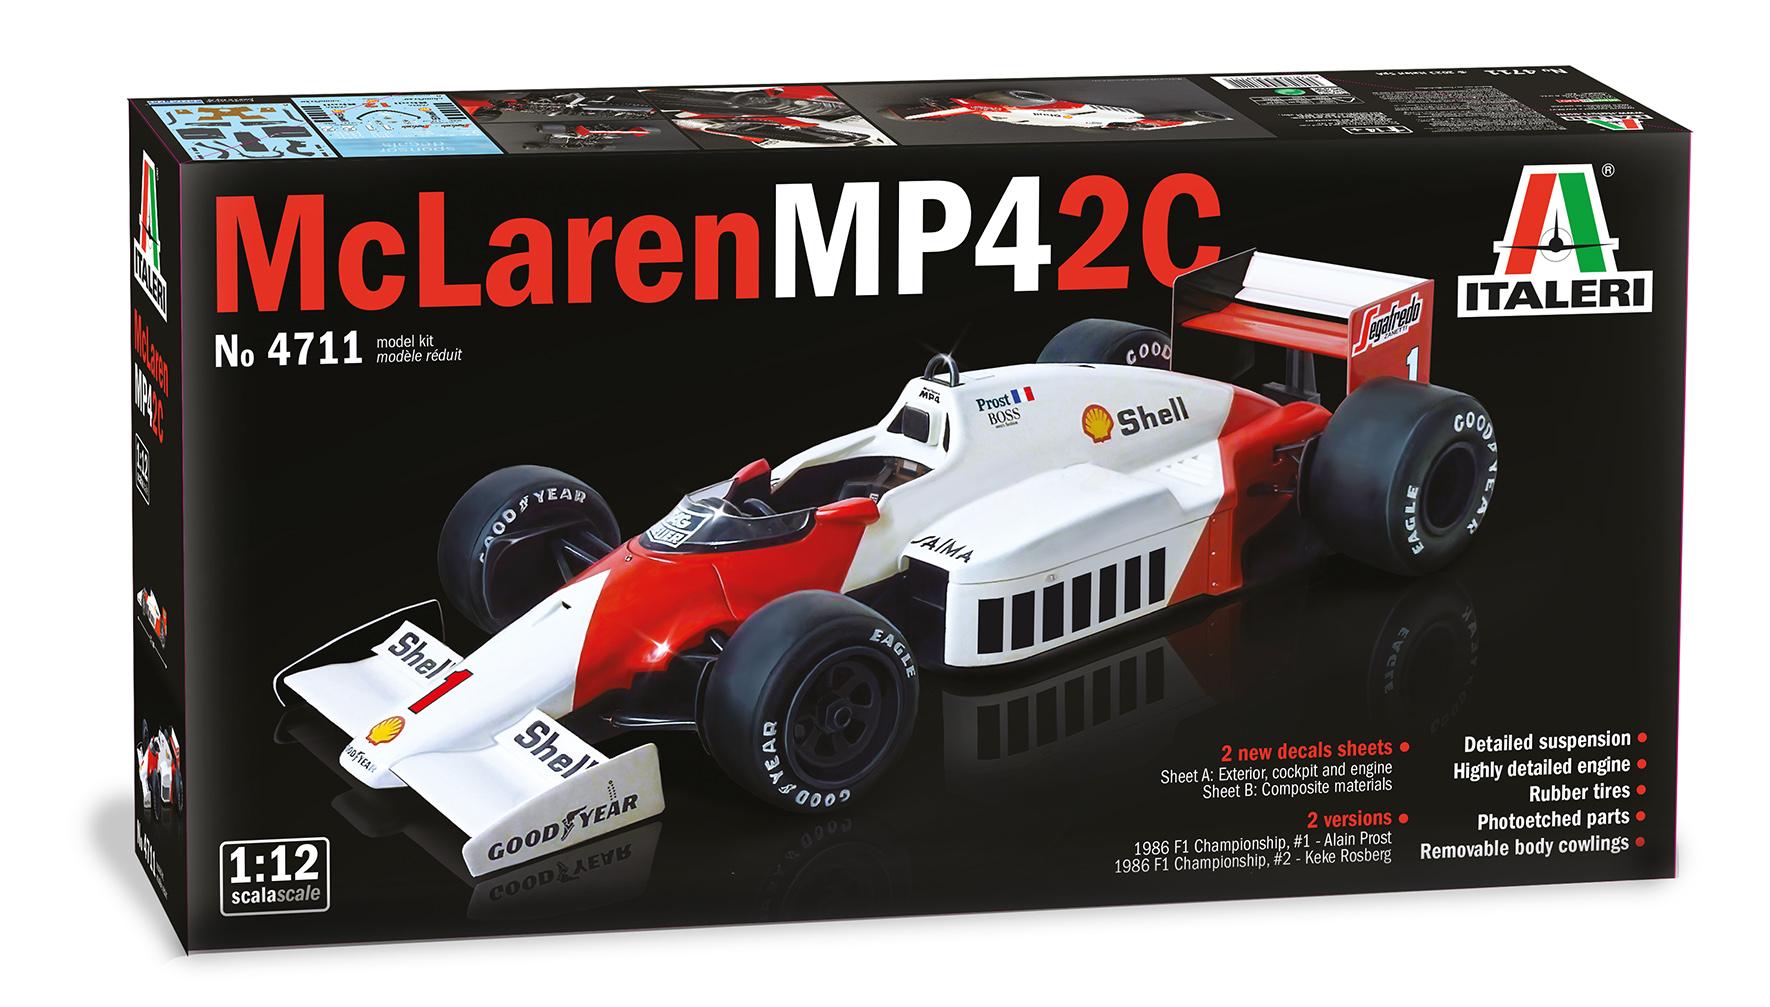 1/12 Italeri McLaren MP4 (TAG turbo) just released - Car Kit News & Reviews  - Model Cars Magazine Forum